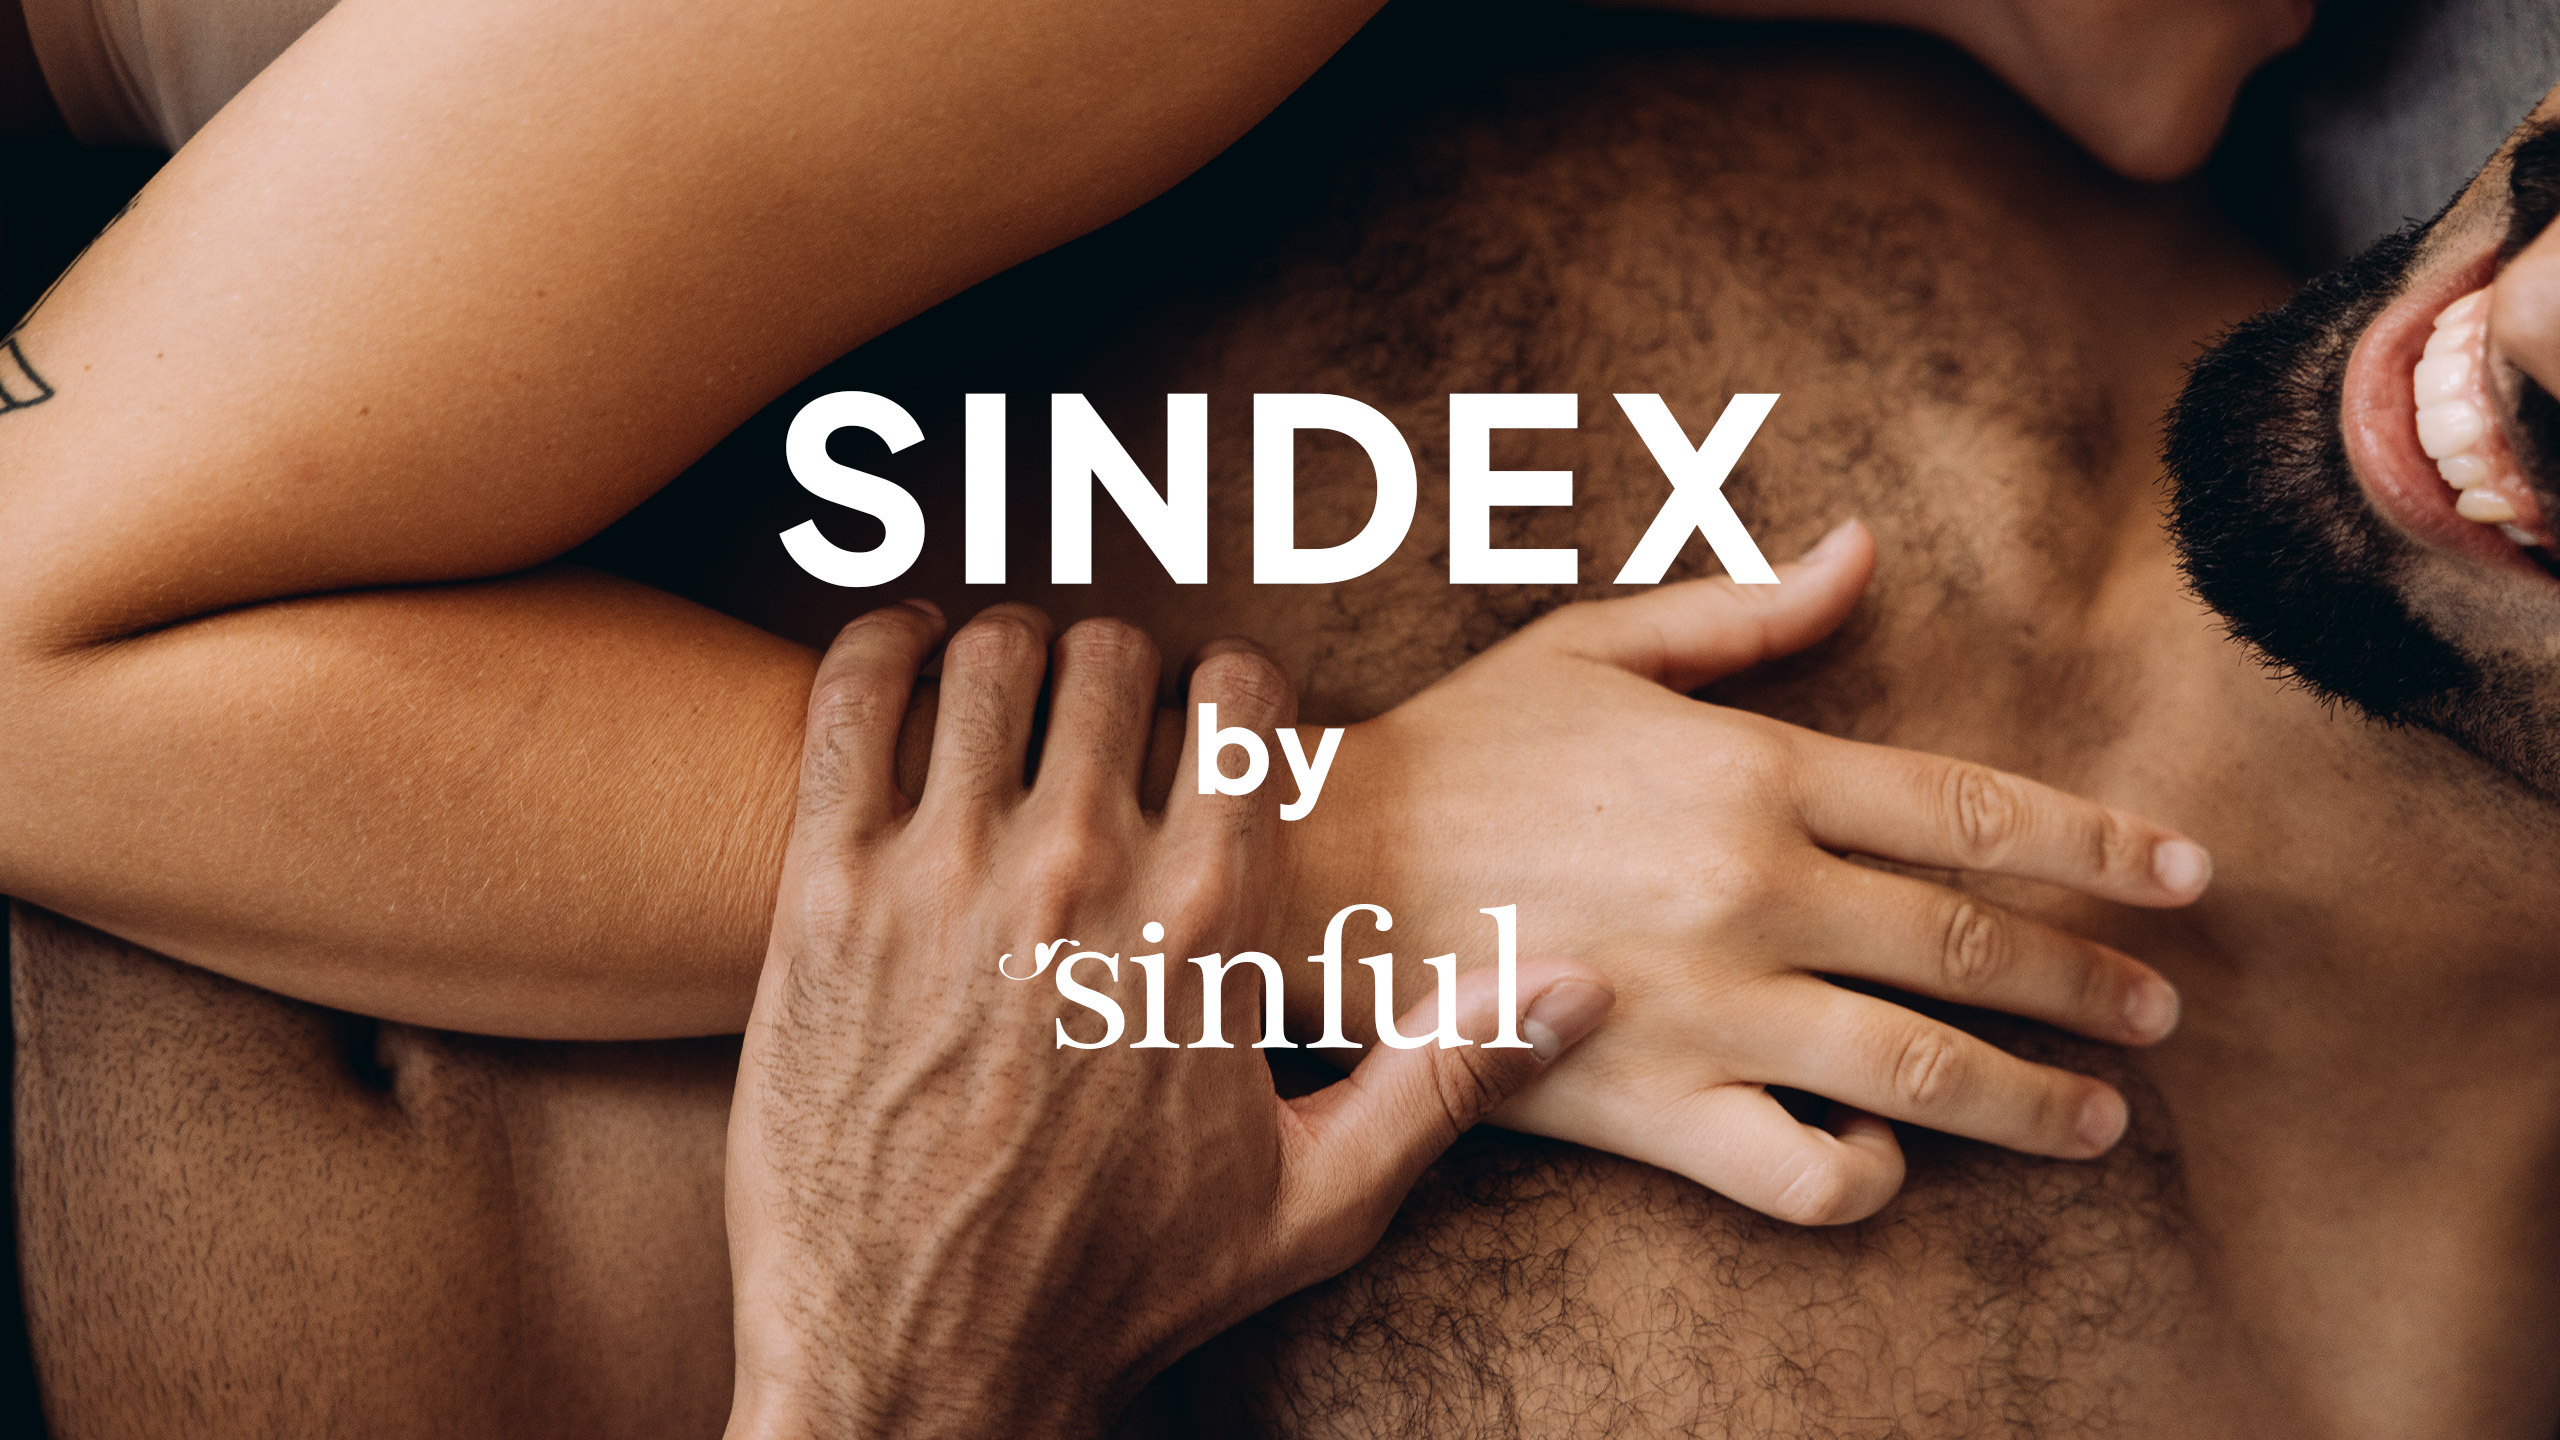 Sindex by Sinful